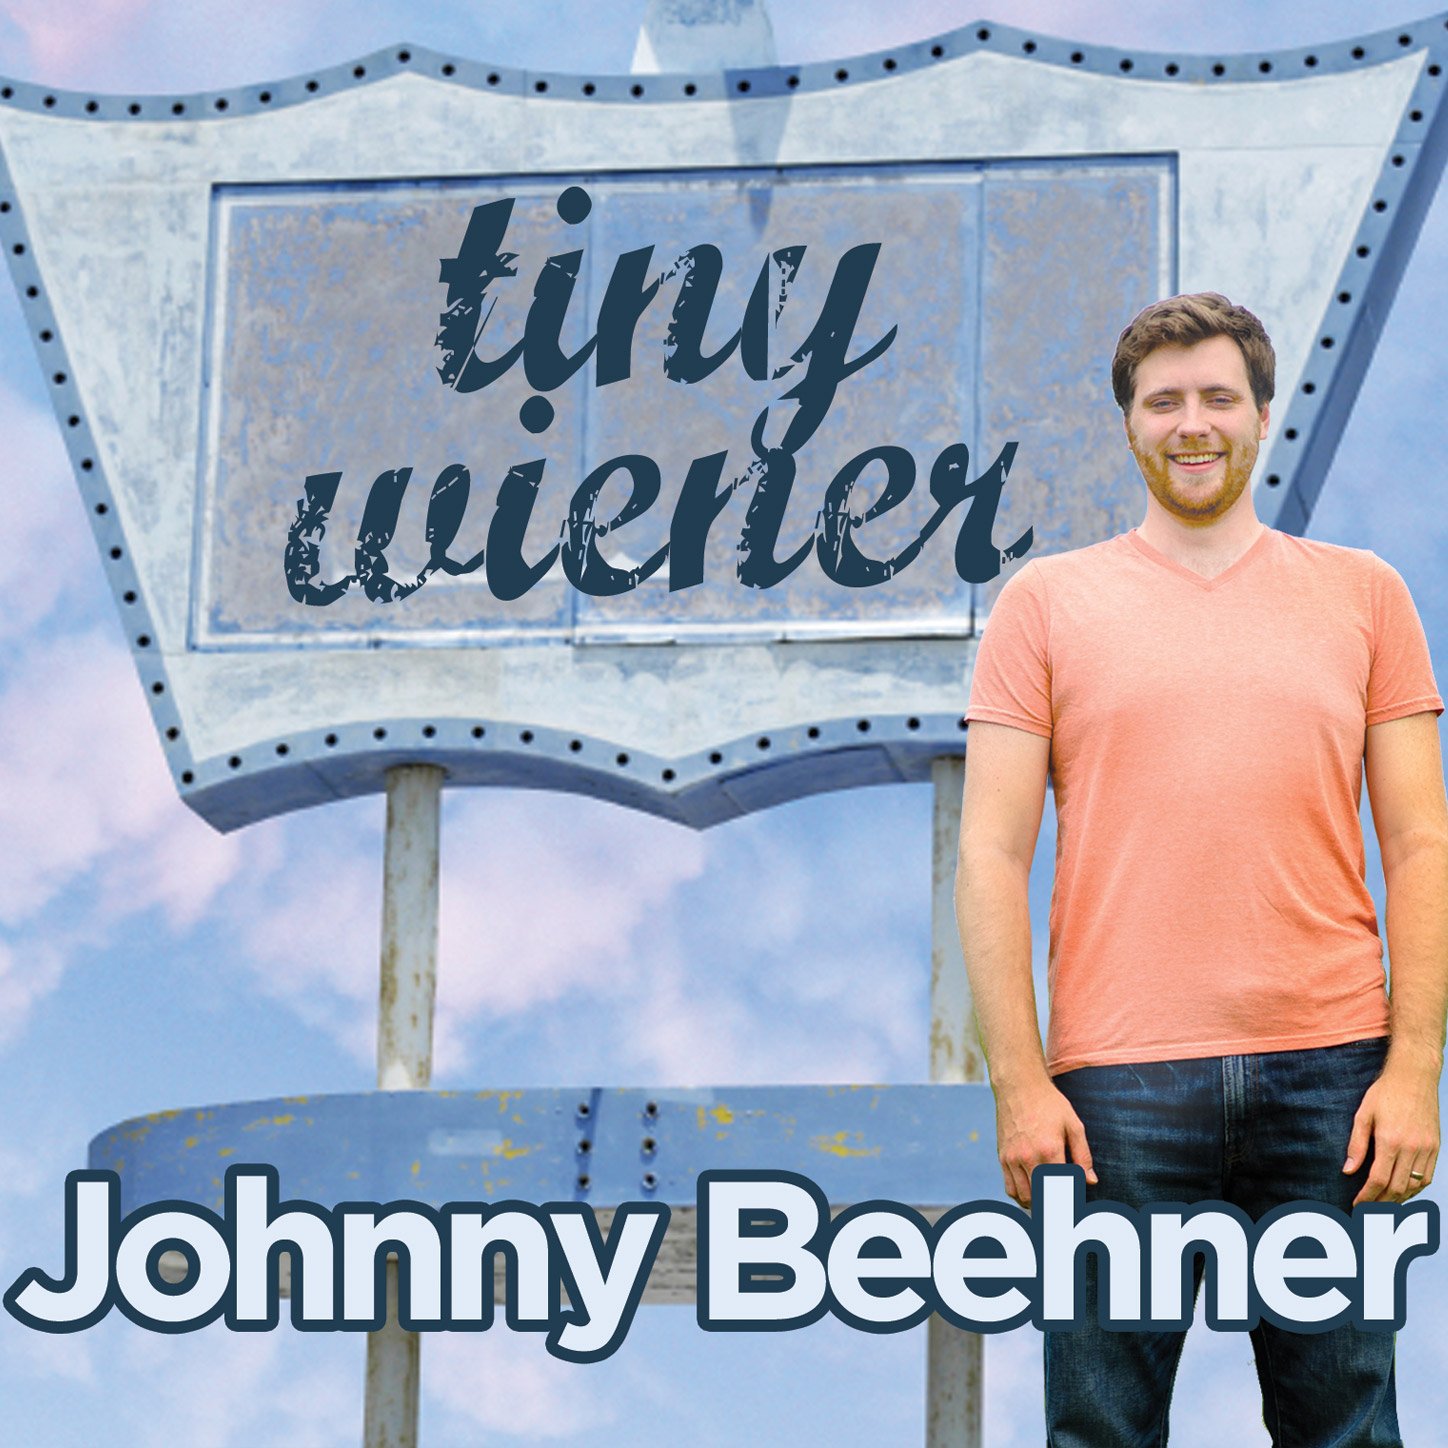 BMA065 - Johnny Beehner - Tiny Wiener.jpg